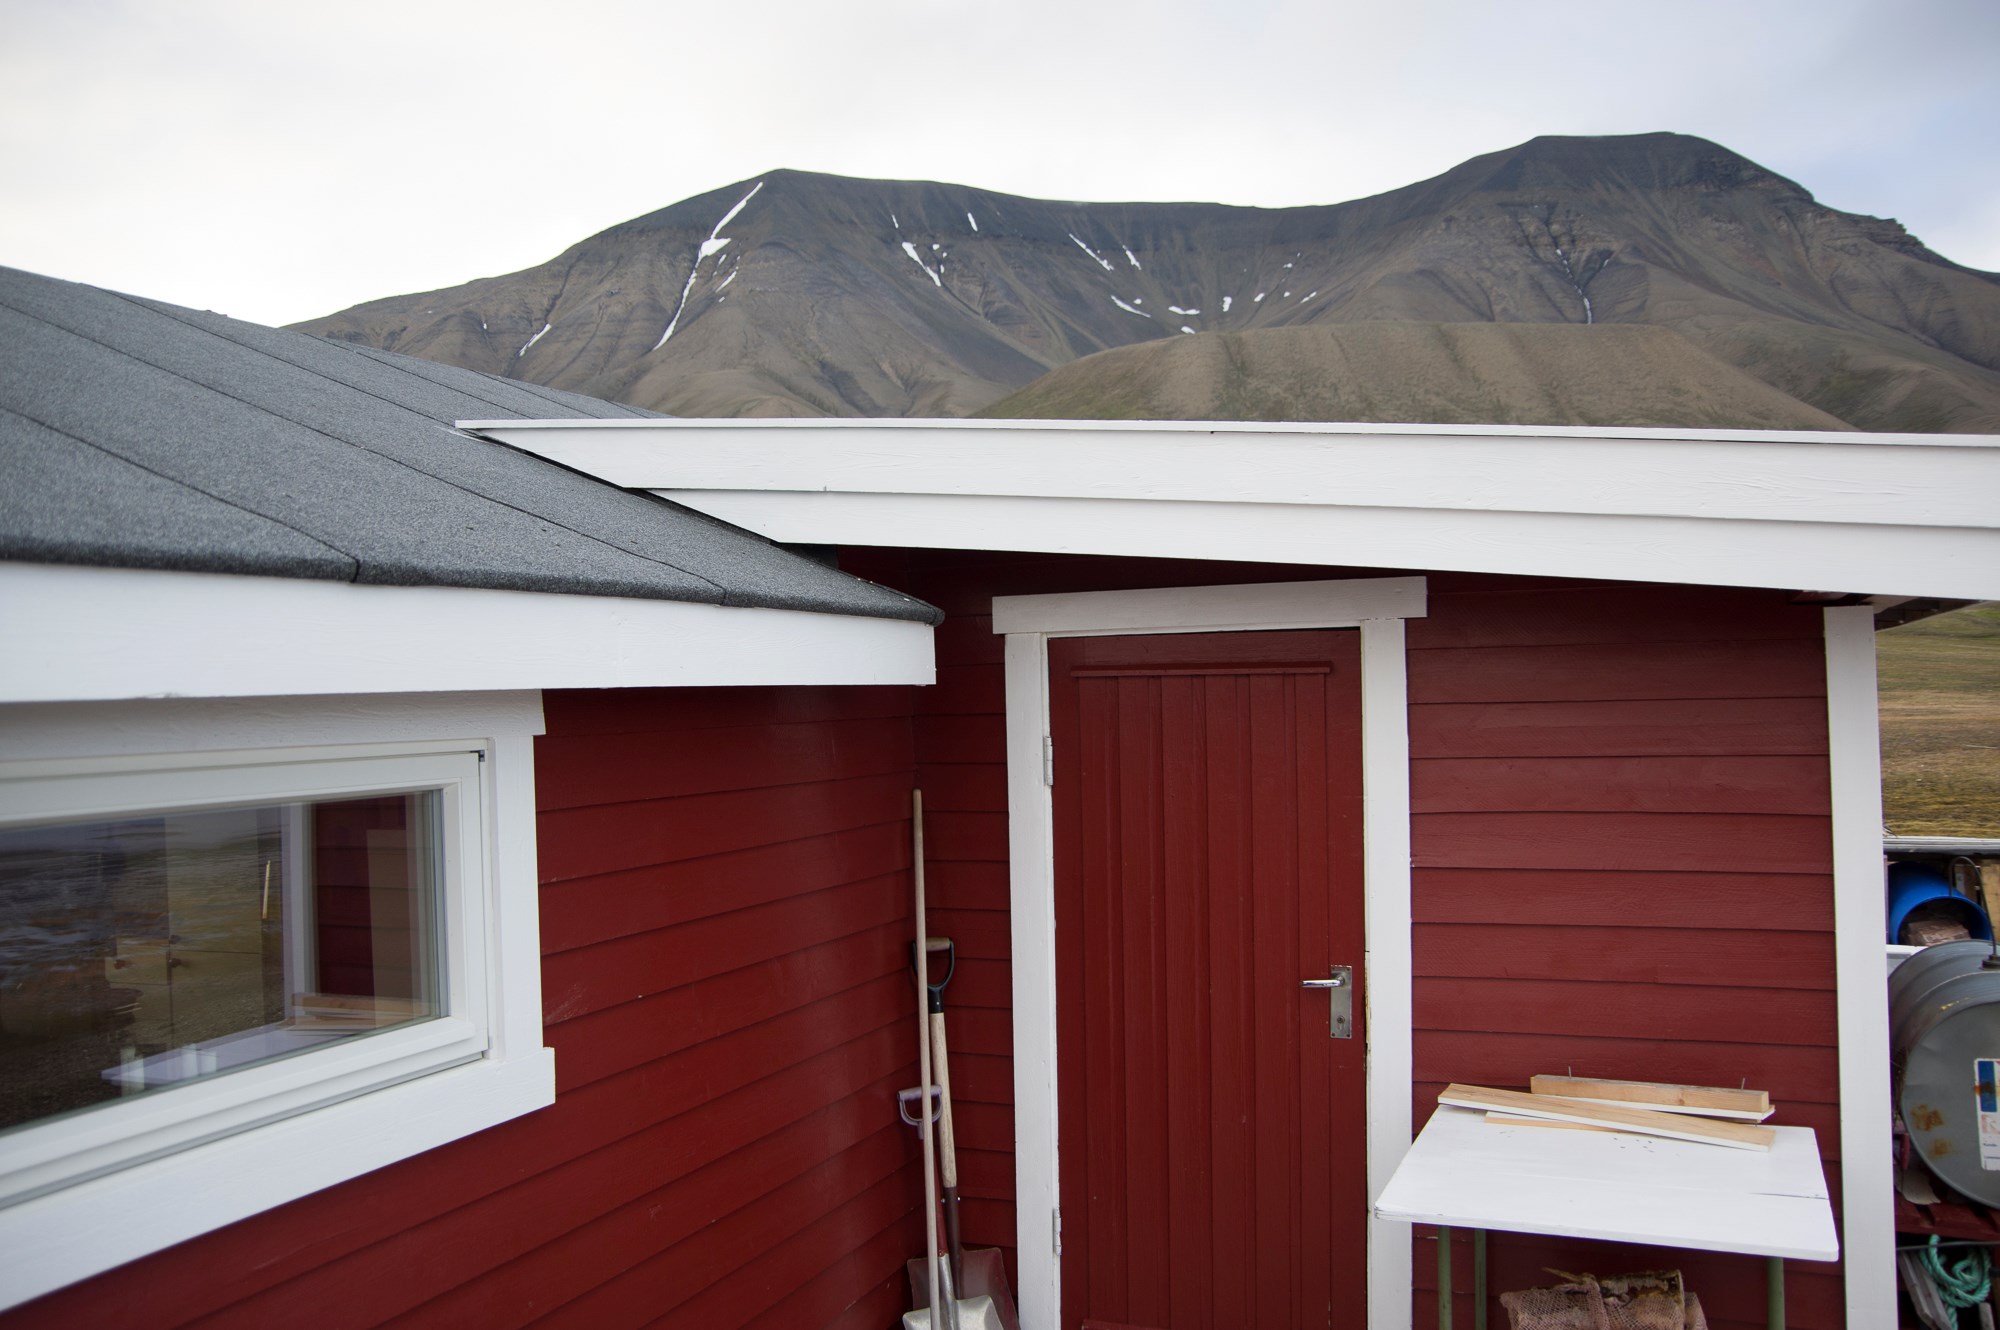 Drywood skal "teste" maling i arktis - Drywood_Svalbard (4 of 3).jpg - rubs